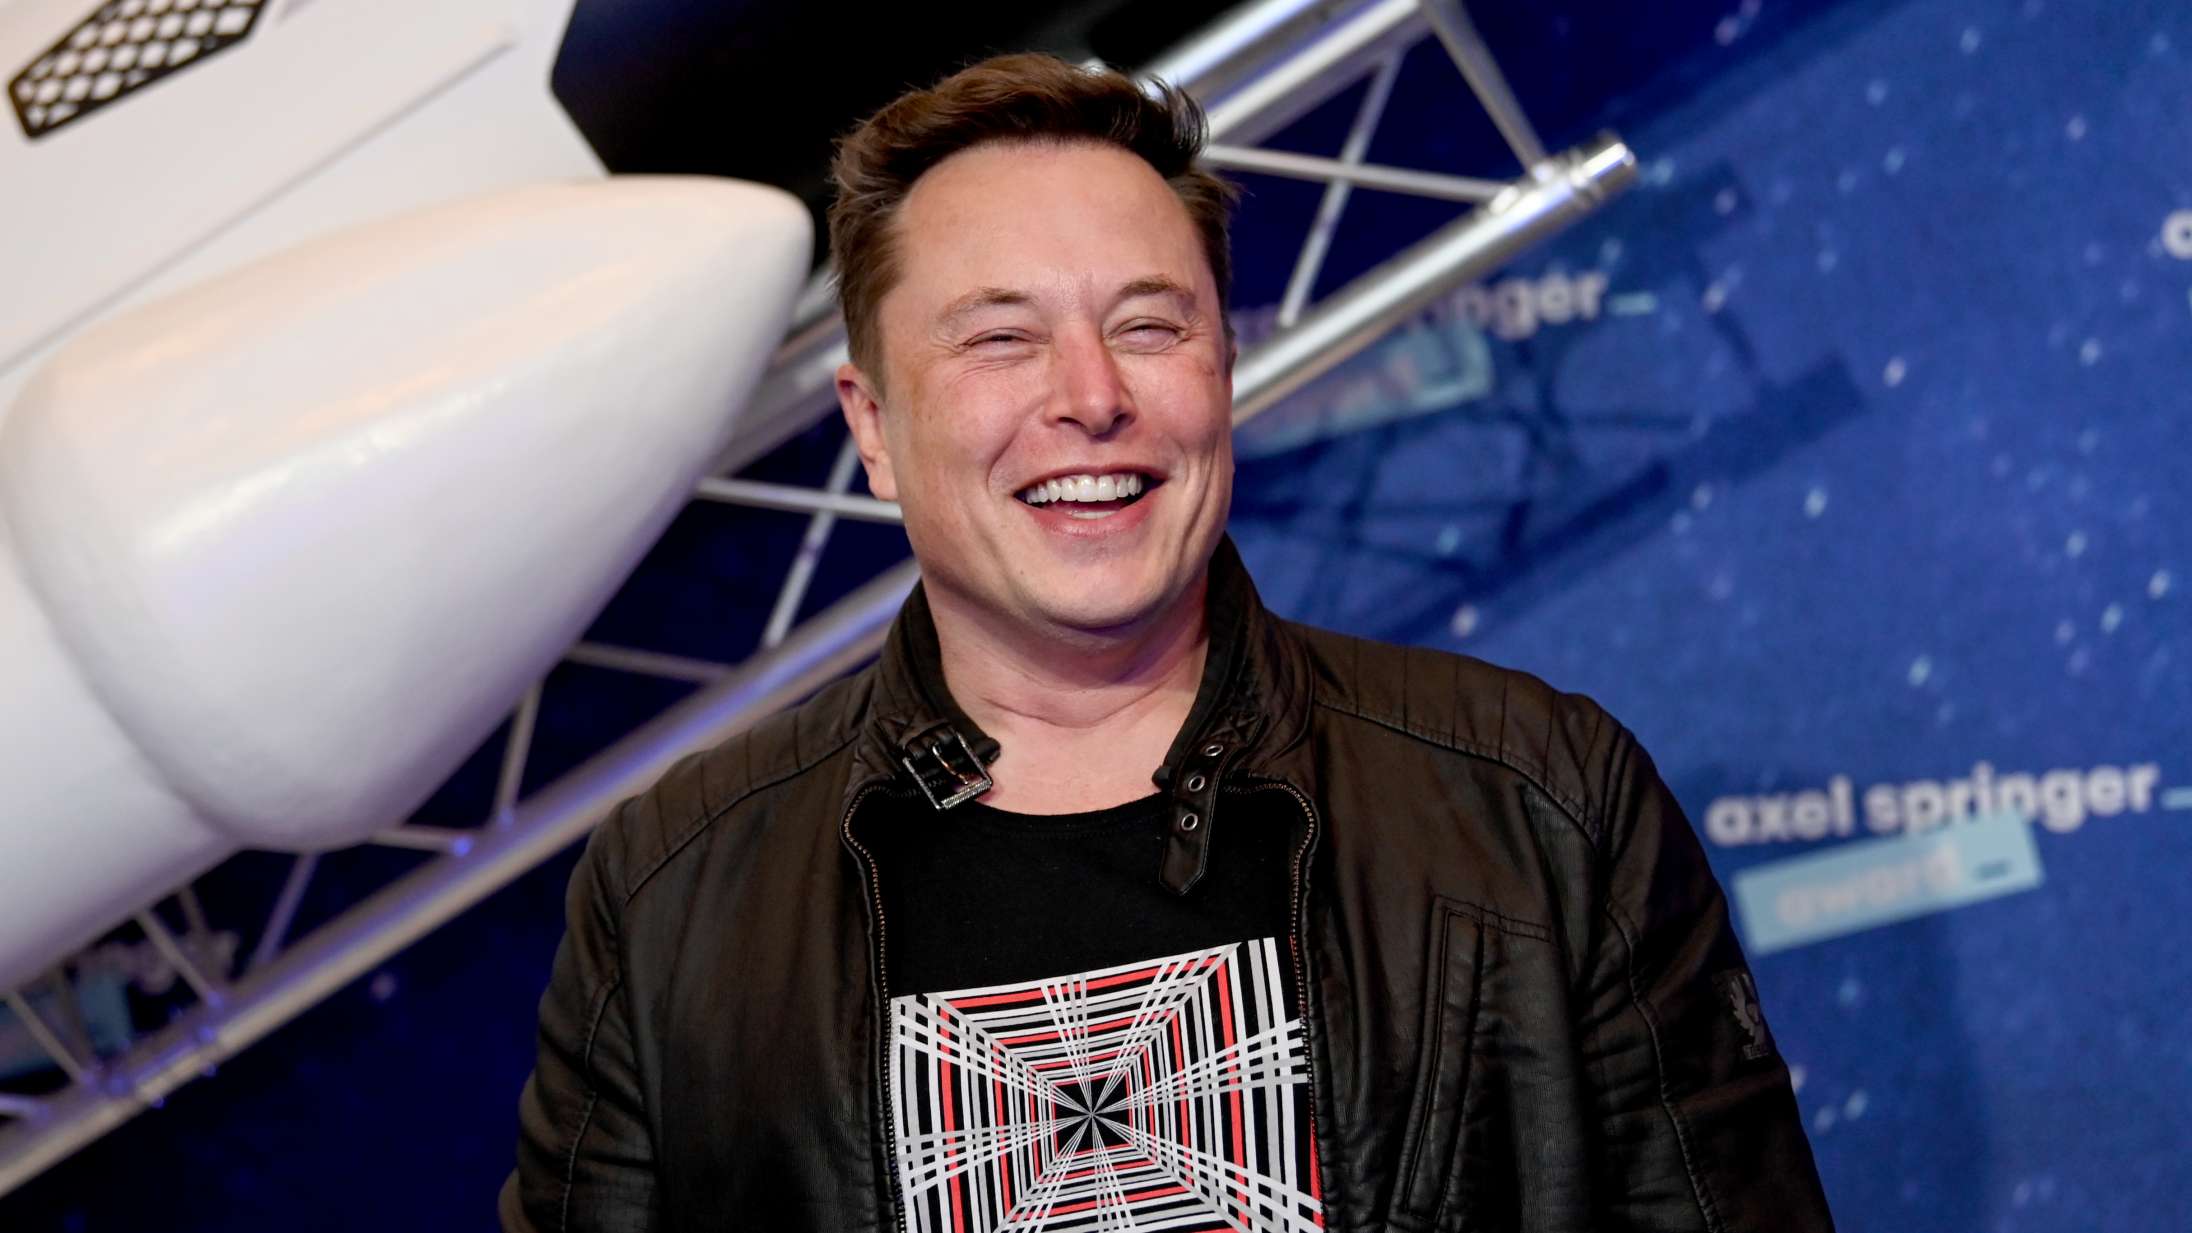 Nu kan du købe Tesla-merchandise med Elon Musks yndlings-kryptovaluta